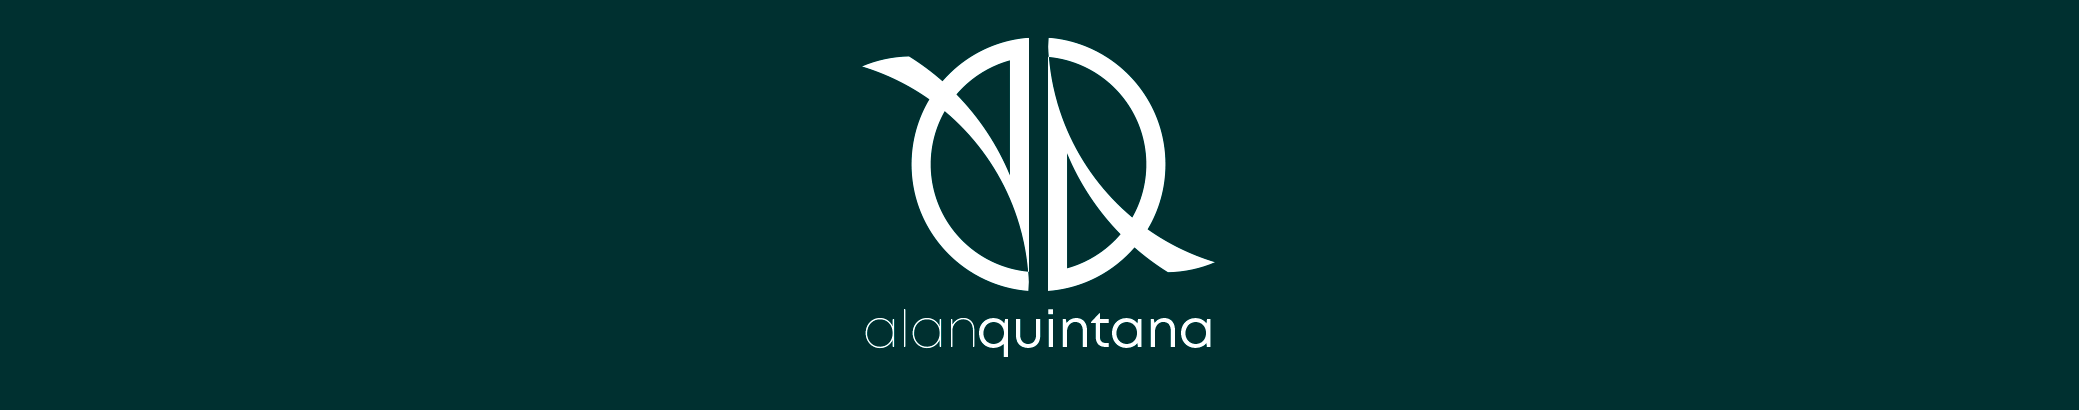 Baner profilu użytkownika Alan Quintana